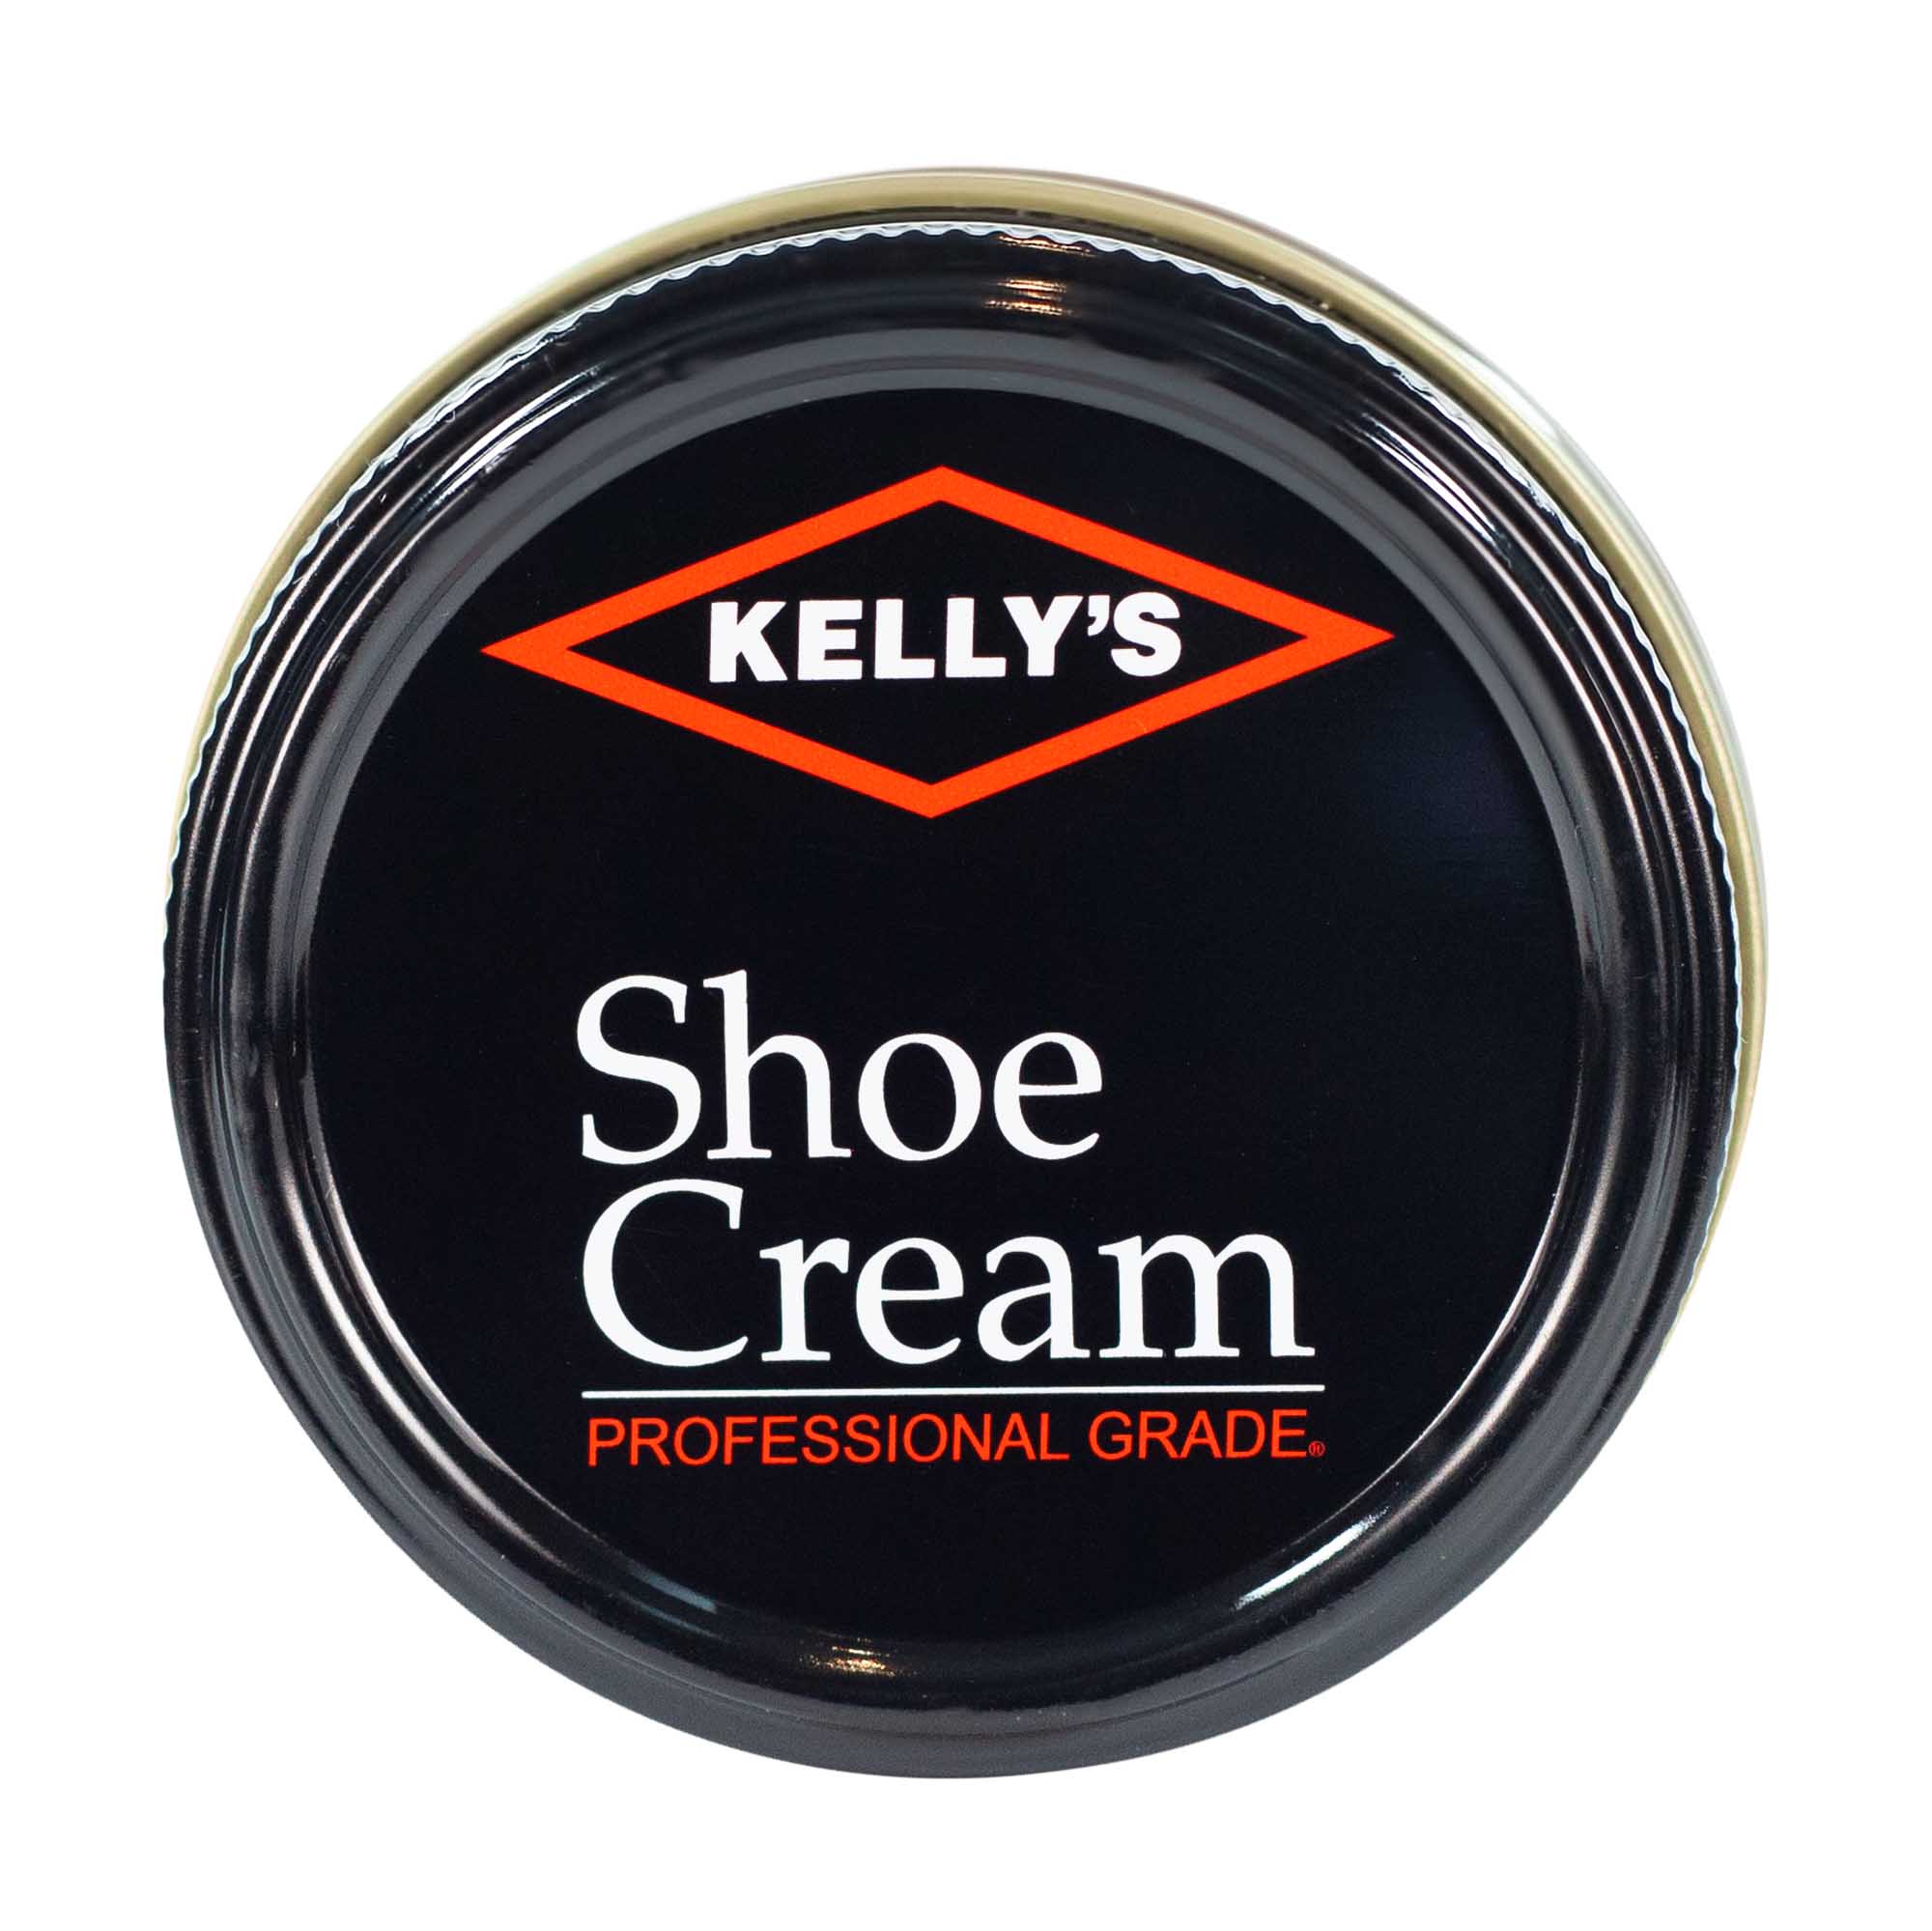 Boot Cream Polish